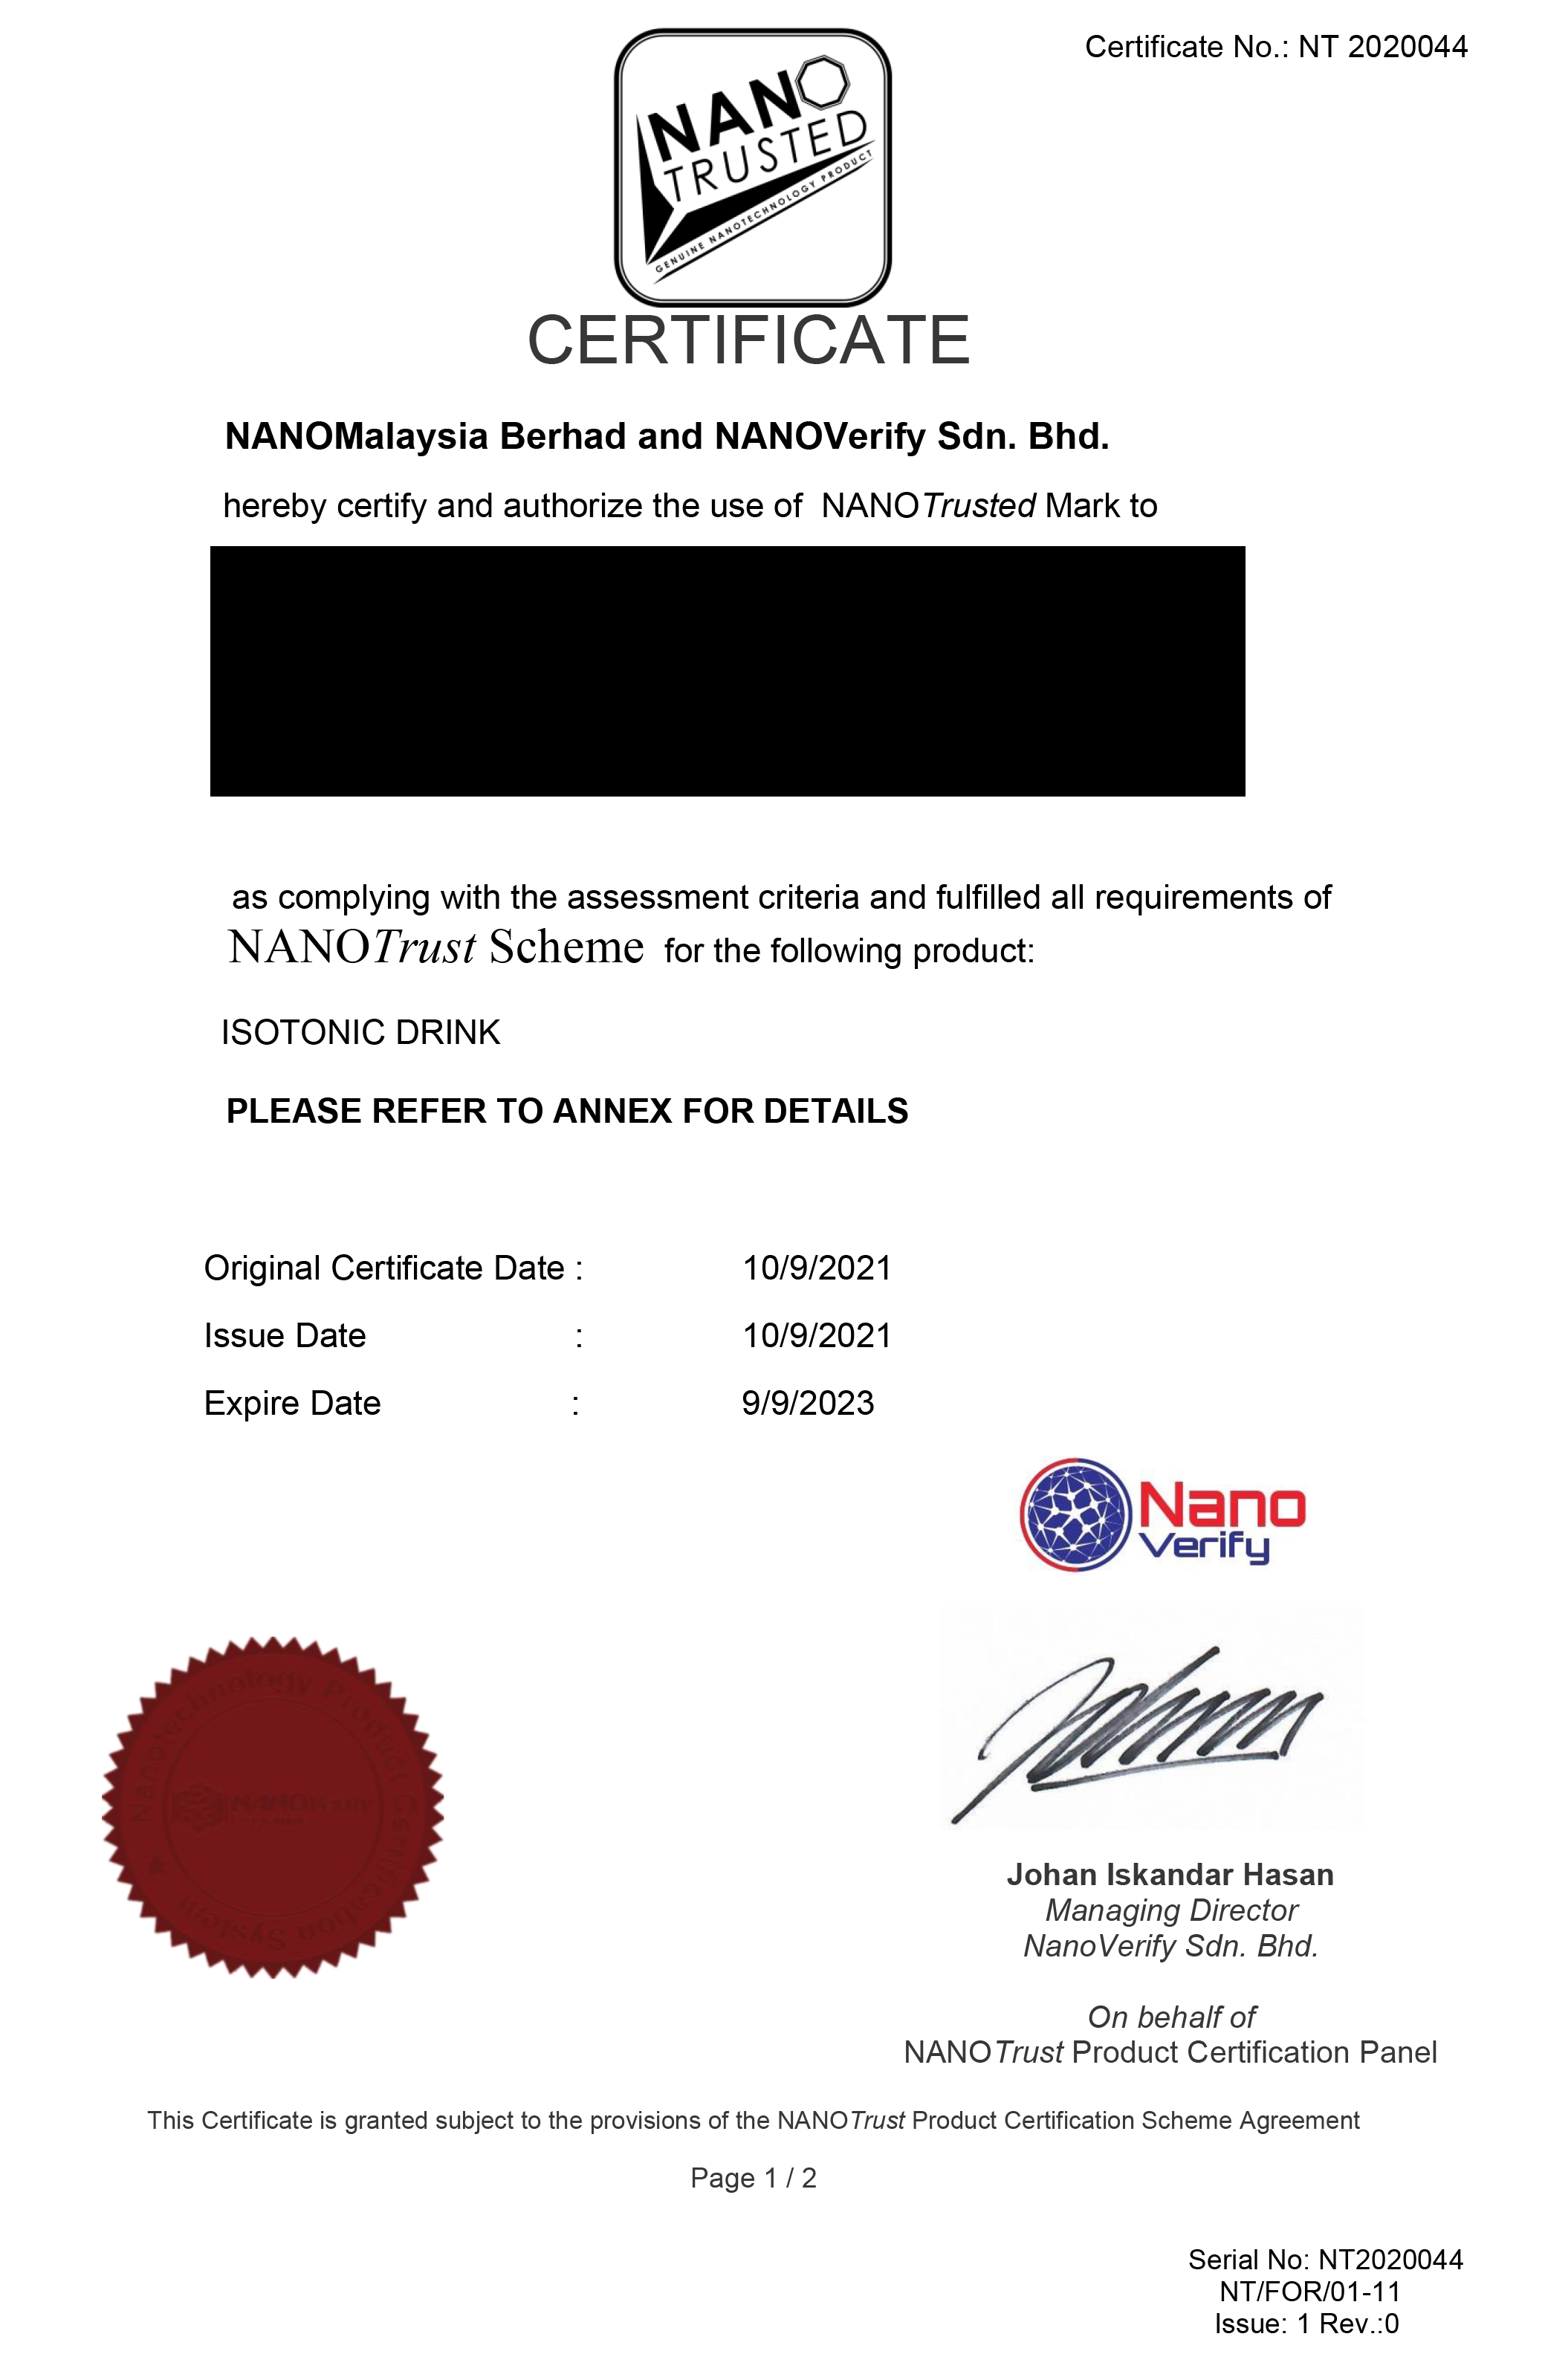 Nano Certification
